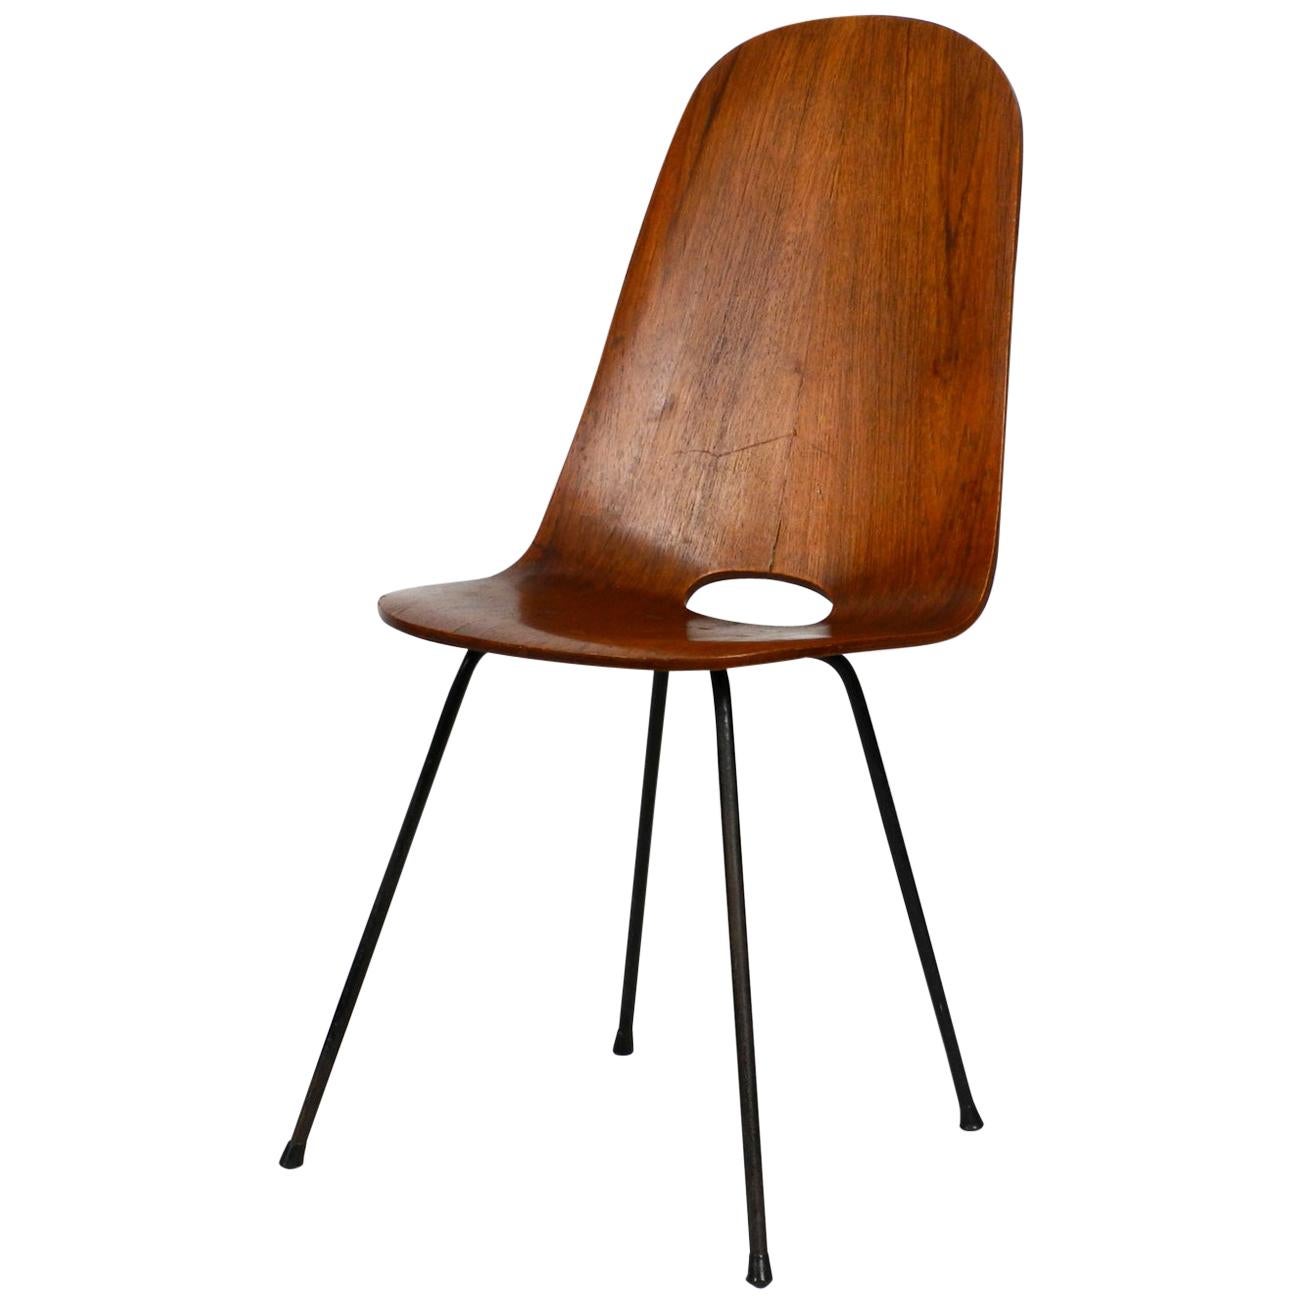 Italian Midcentury Chair by Vittorio Nobili Made of Plywood with Teak Veneer